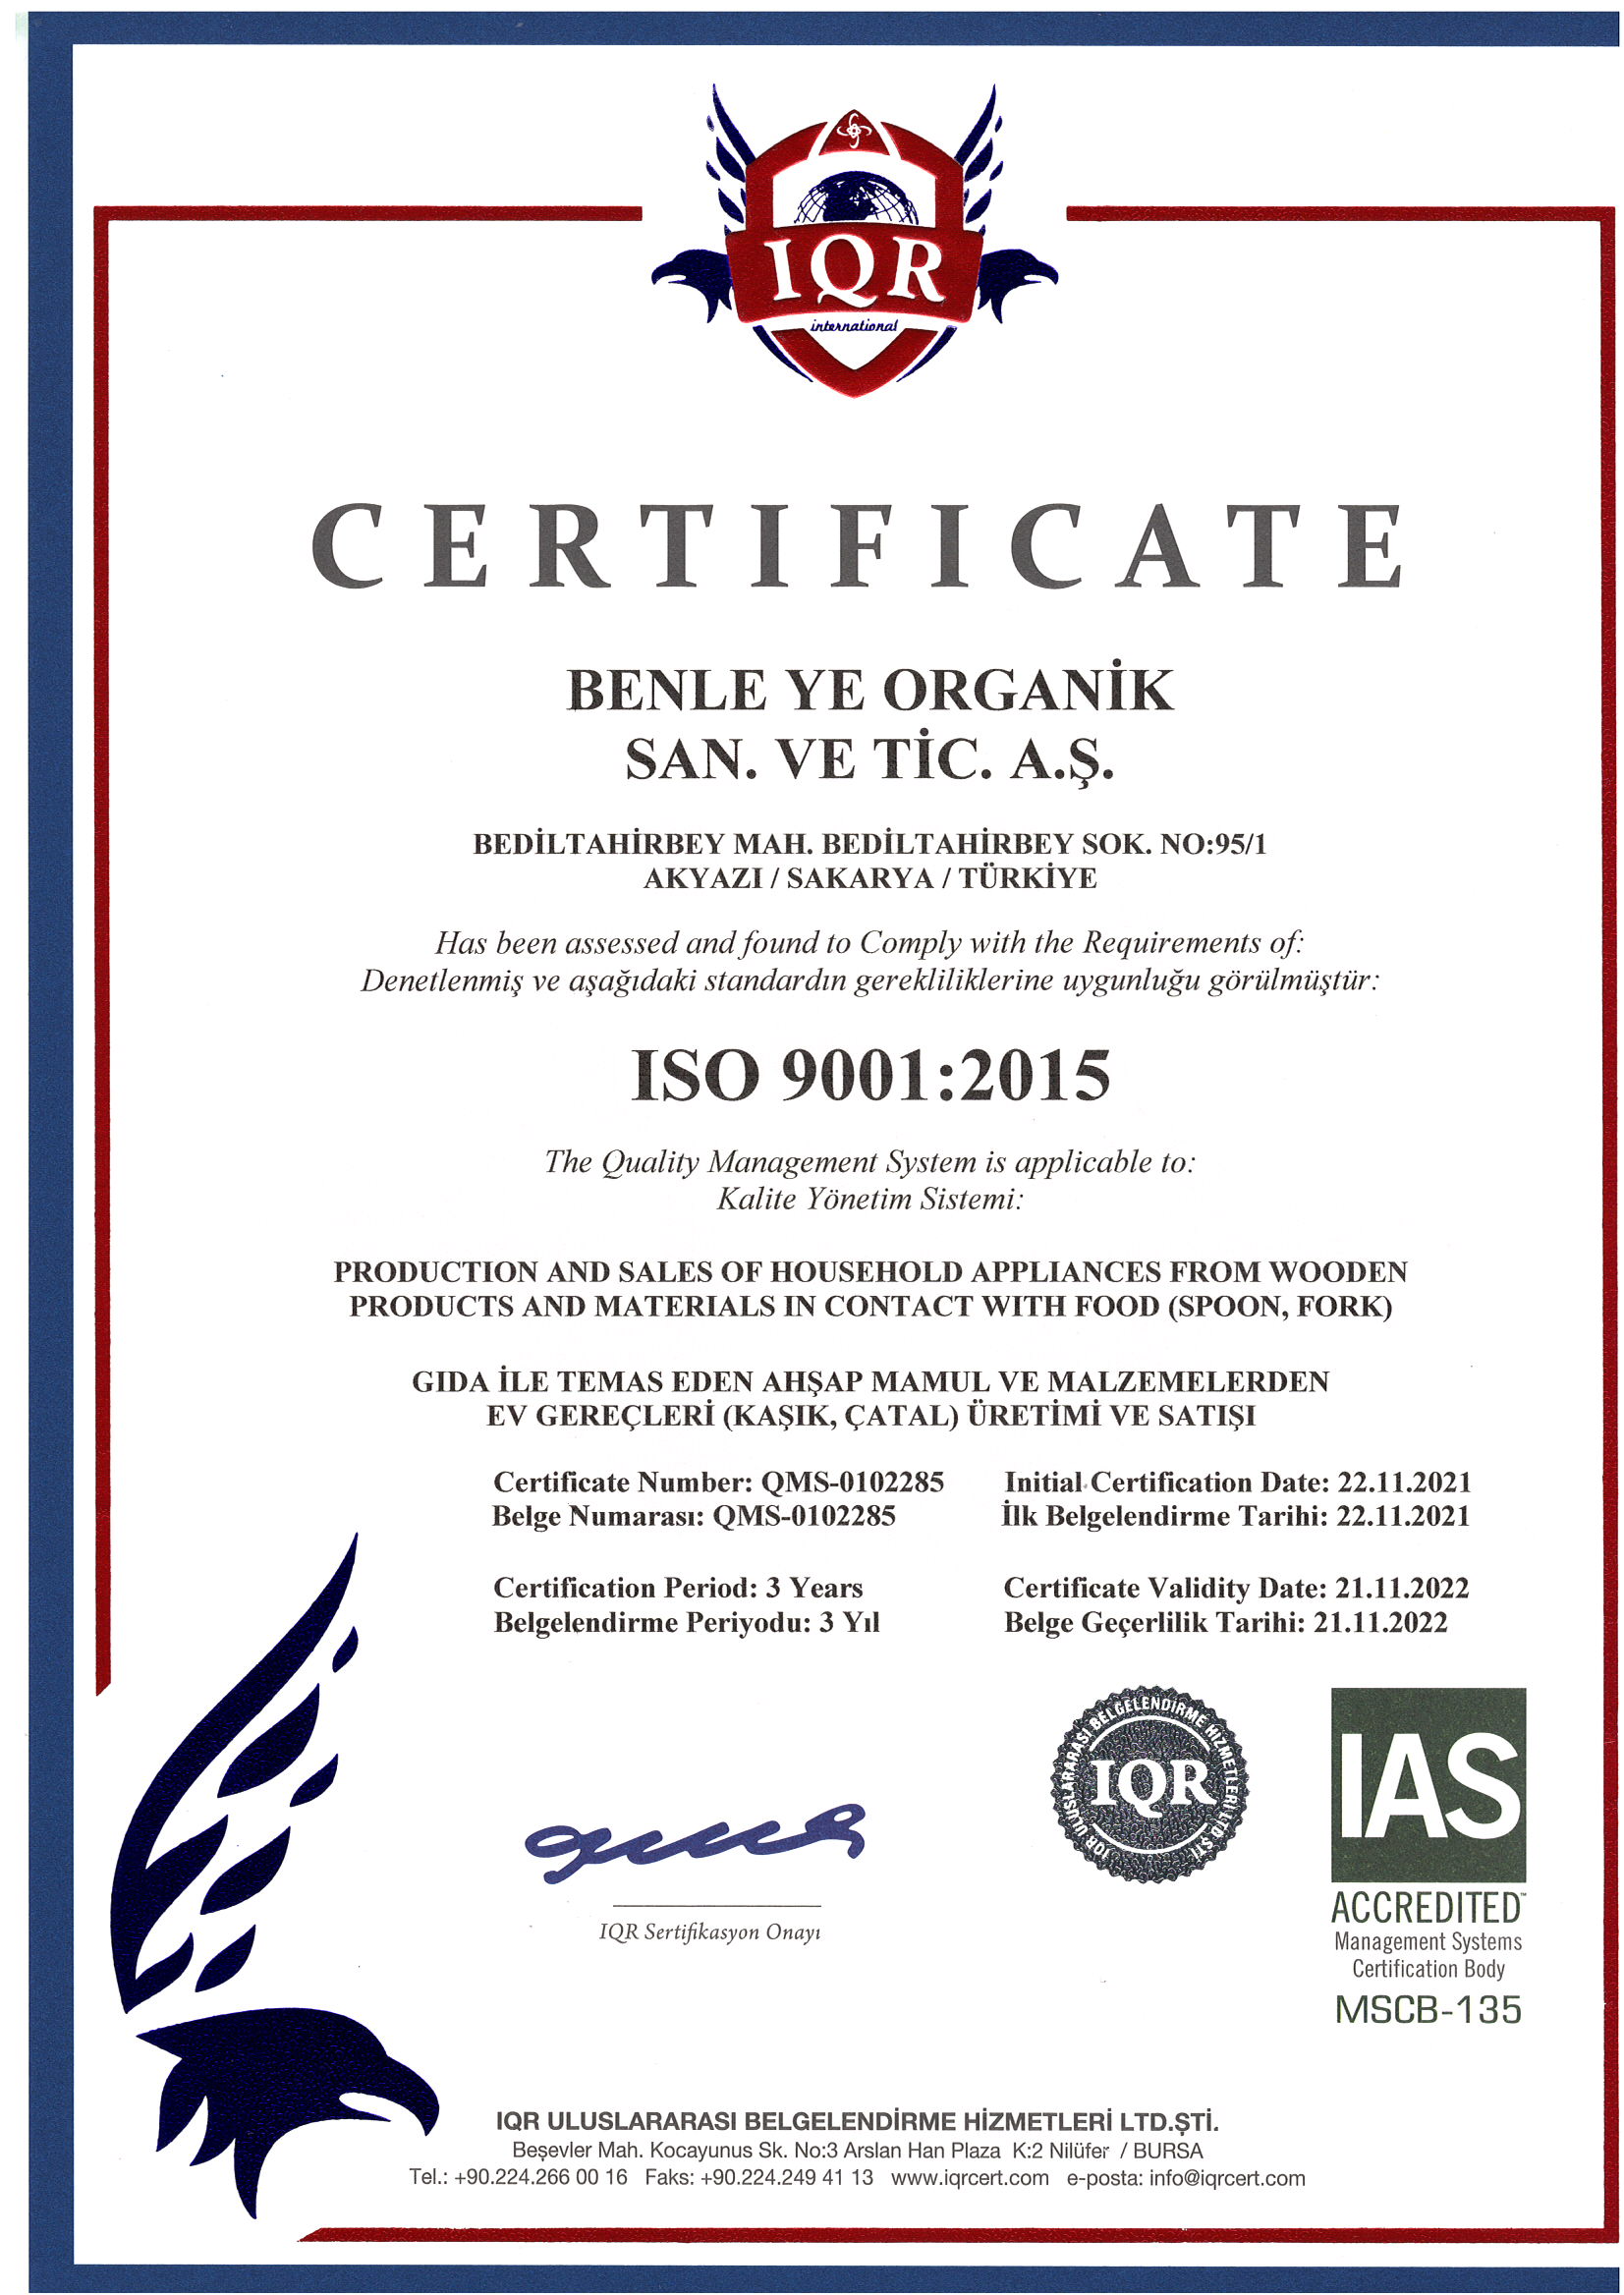 Benleye Organik ISO 9001 Certificate